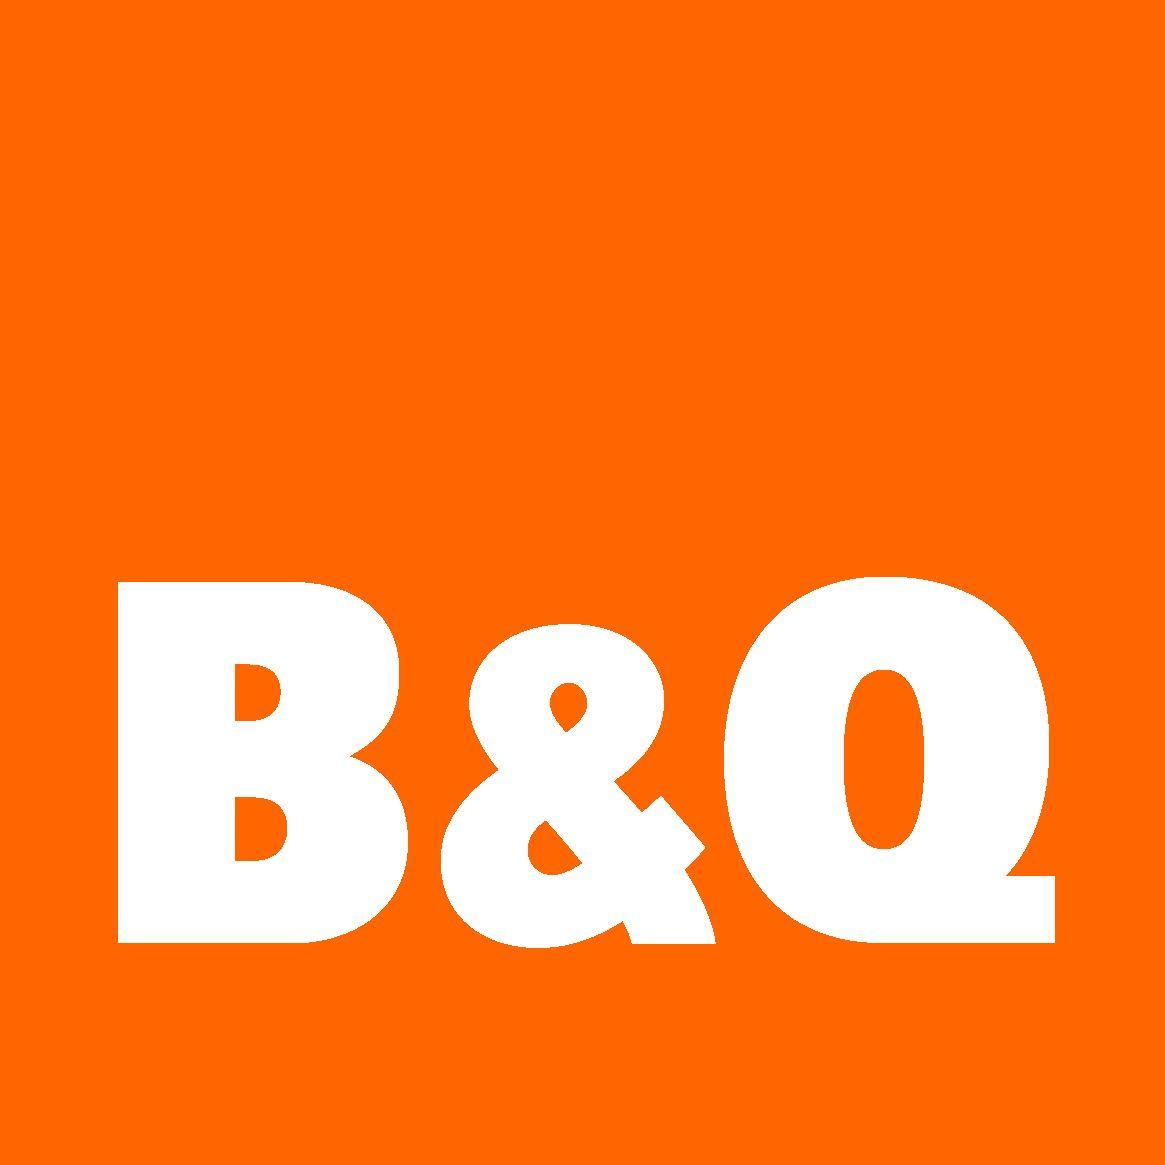 Part of Orange B Logo - Kingfisher plc - Media - Image library - Logos